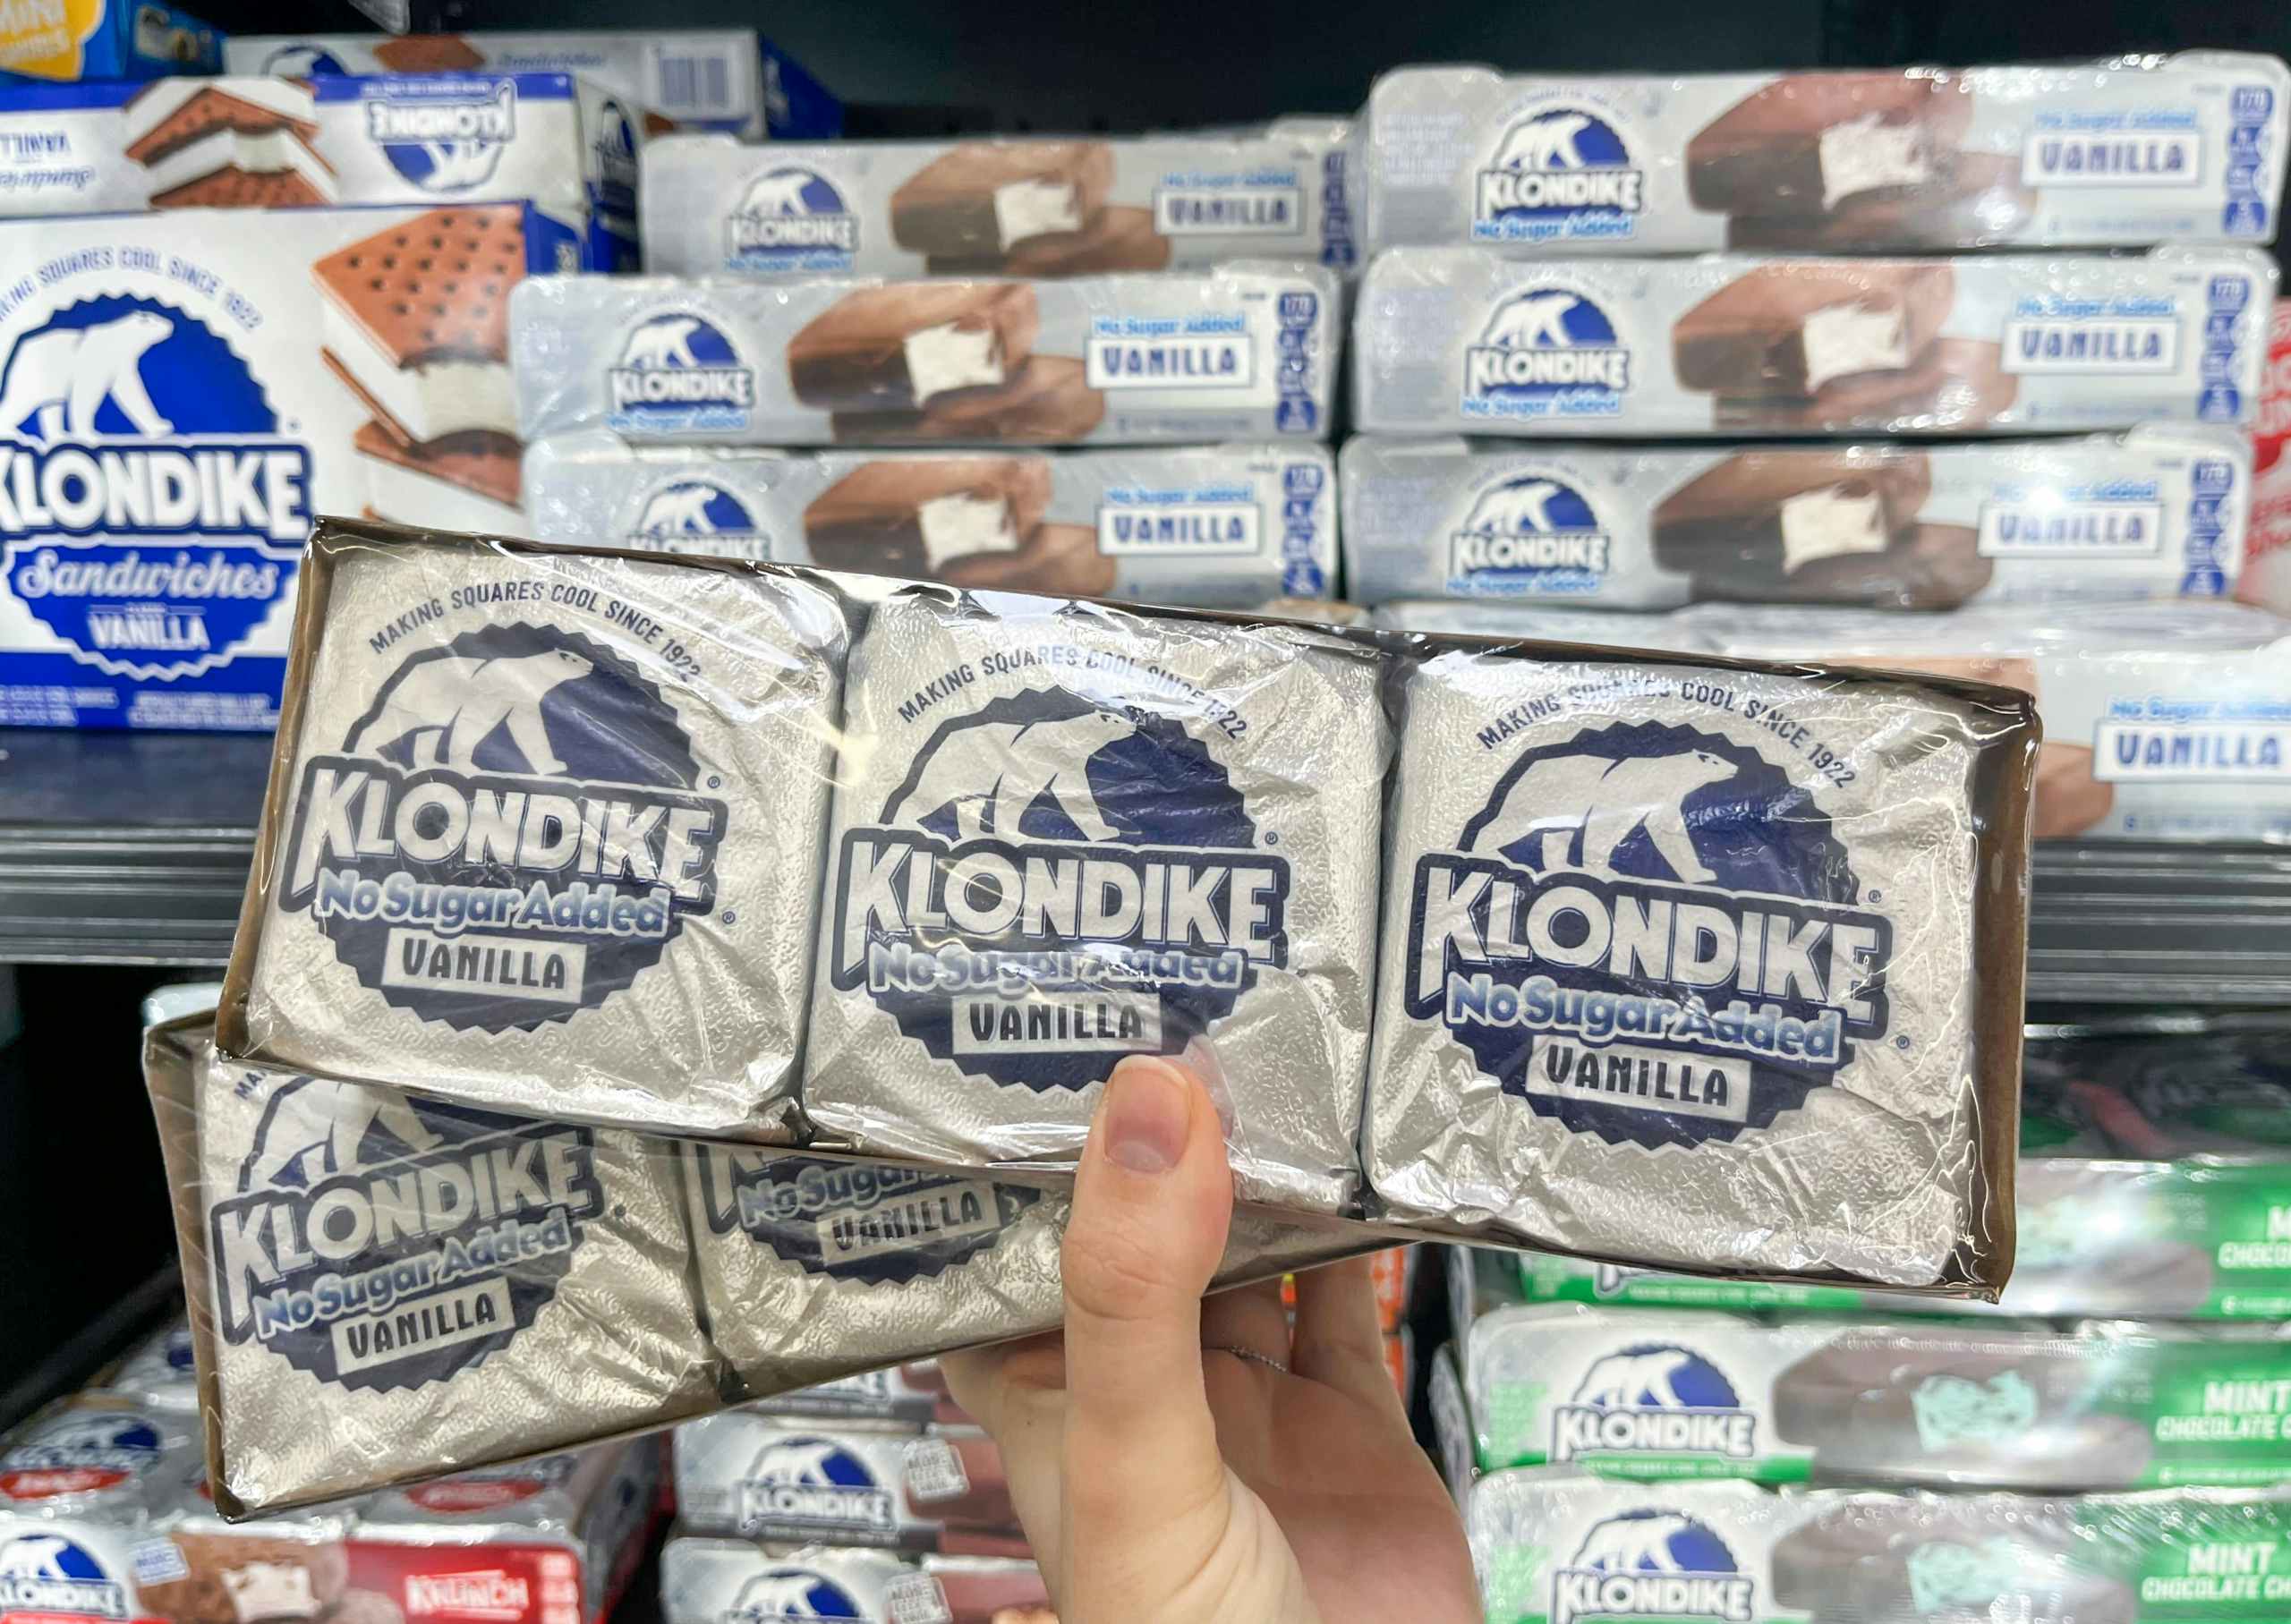 Klondike No Sugar Added at Walmart